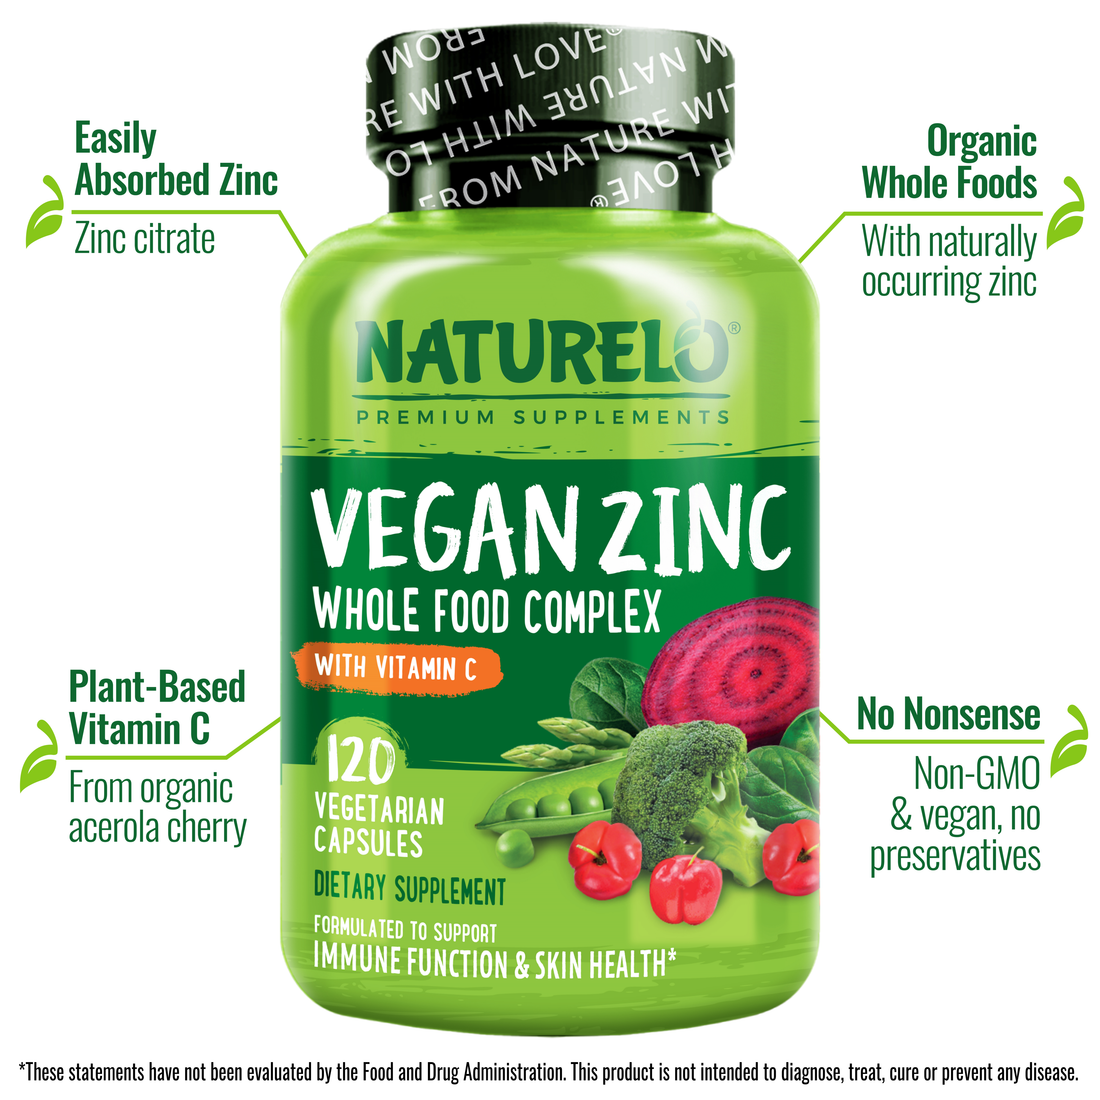 Whole Food Vegan Zinc Complex Supplement